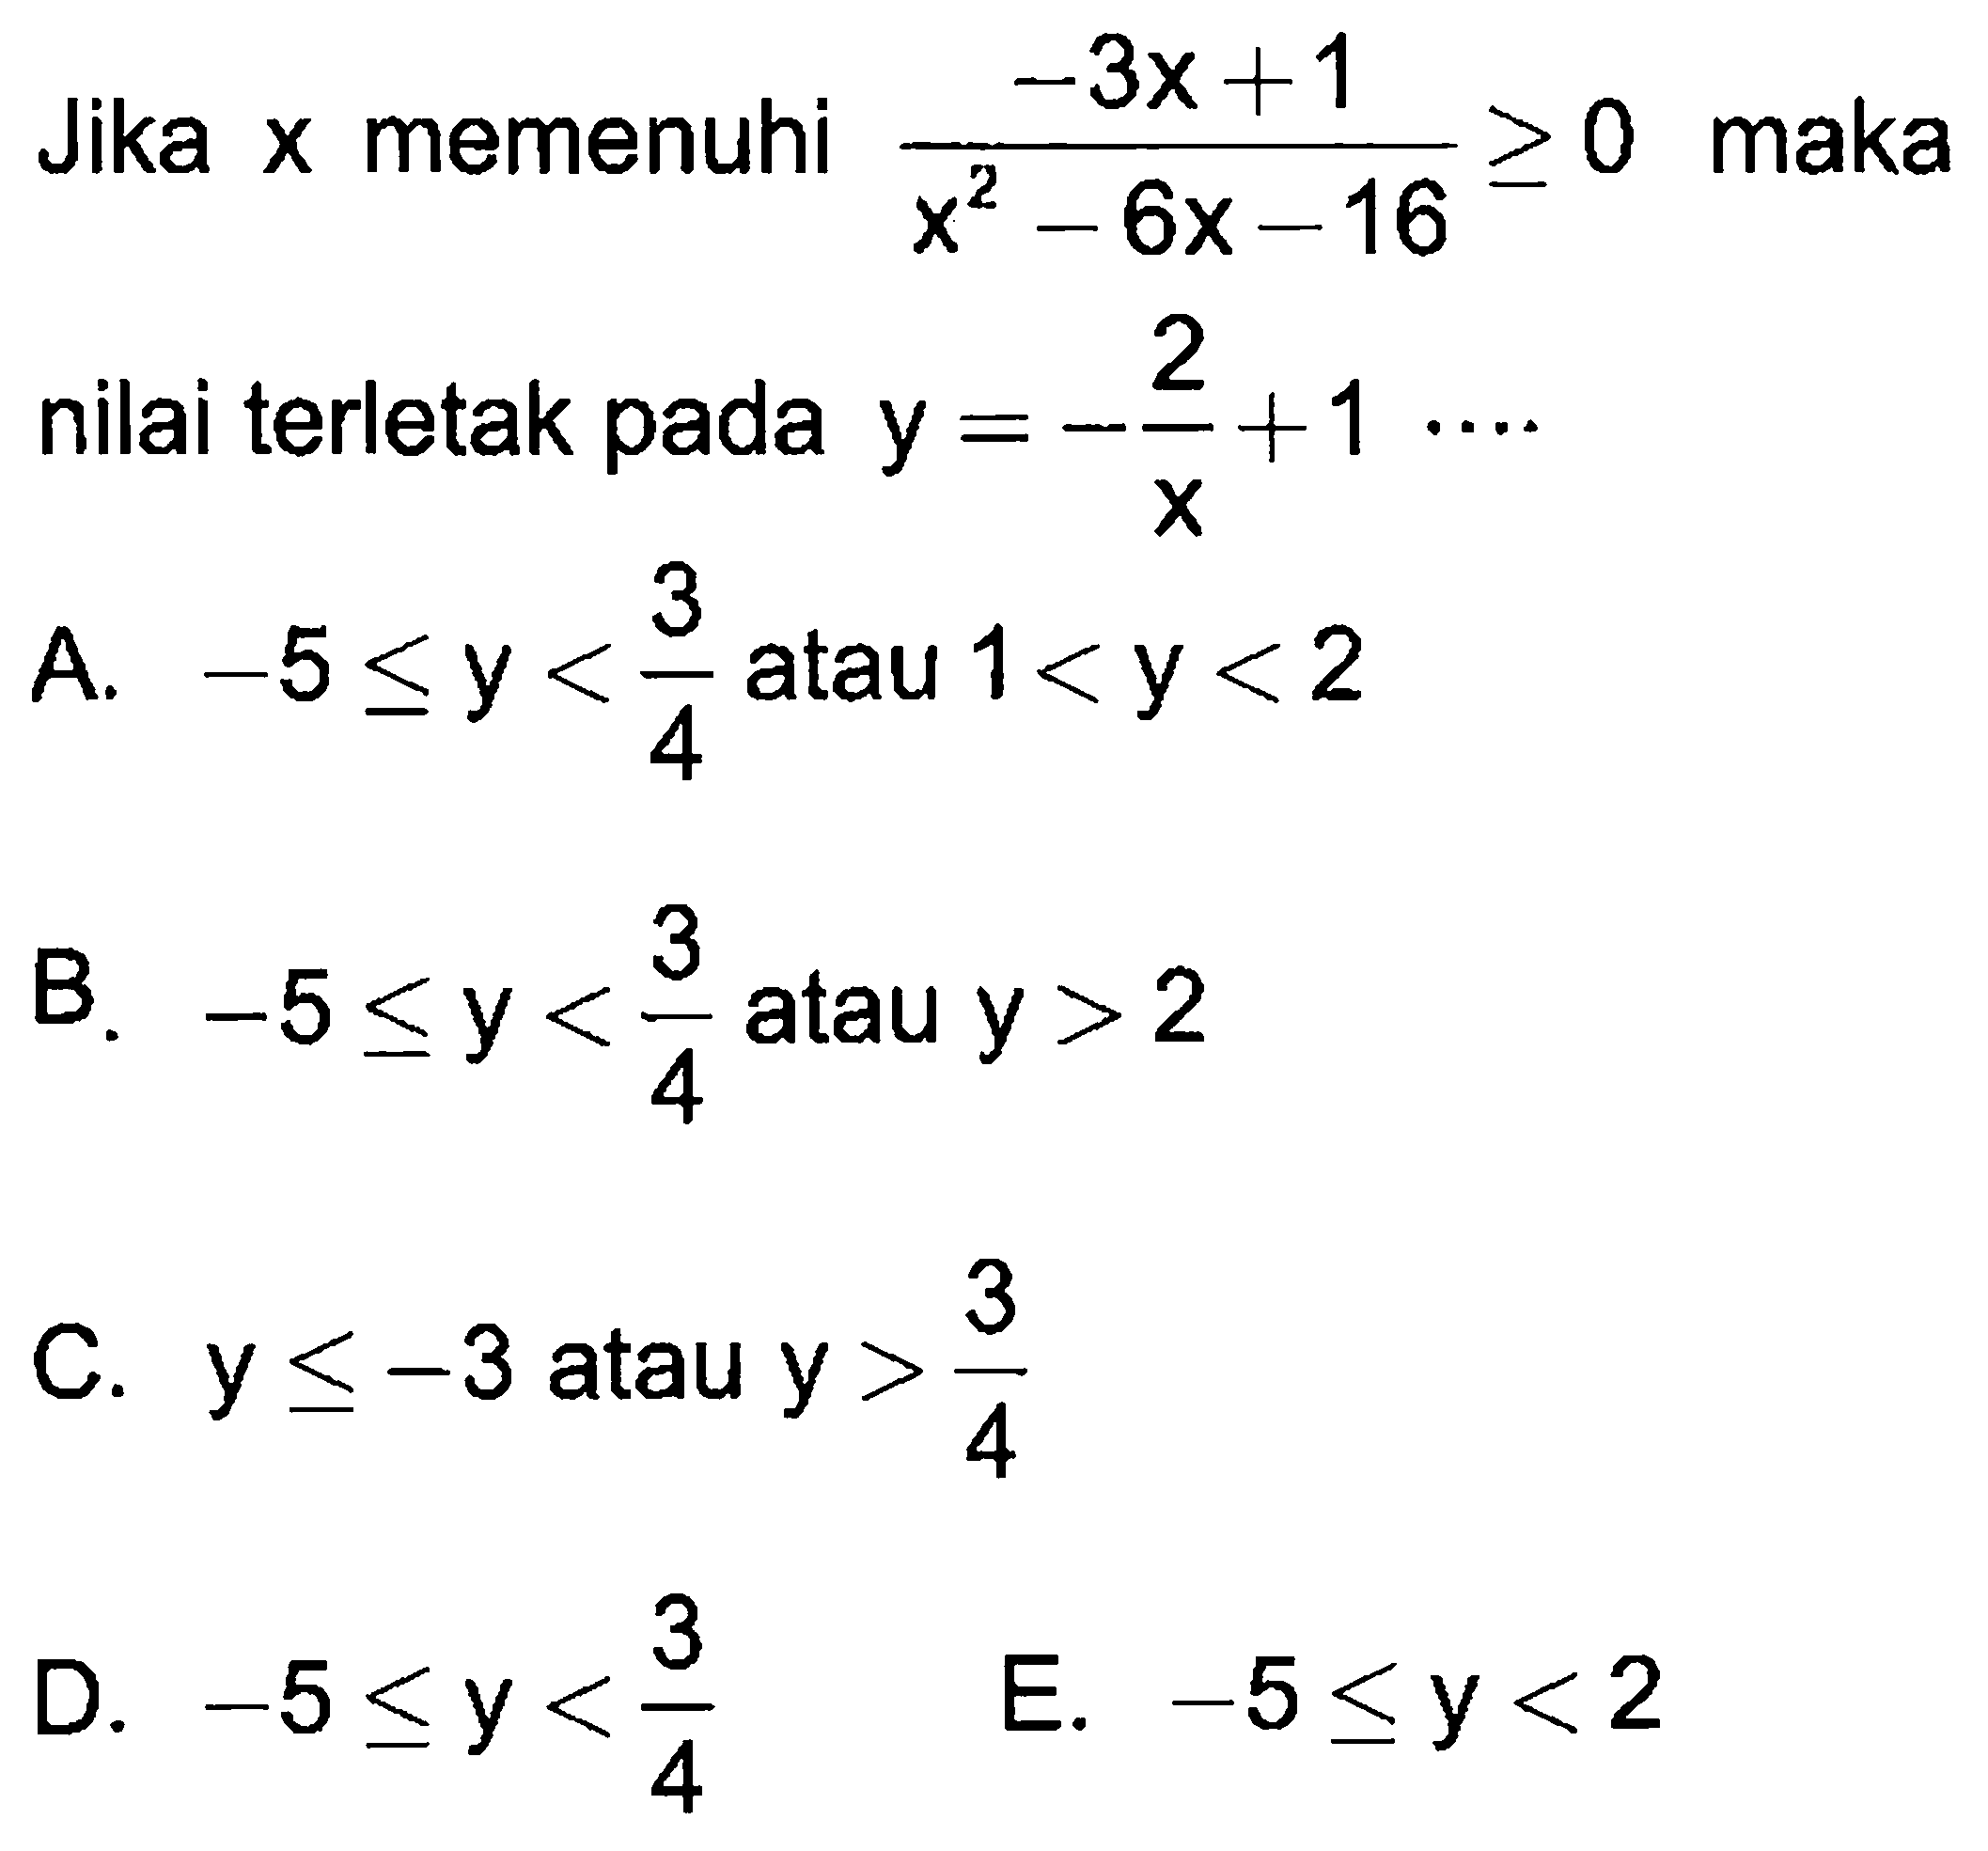 Jika memenuhi (-3x+1)/(x^2-6x-16)>=0 maka nilai terletak pada y=-2/x+1...